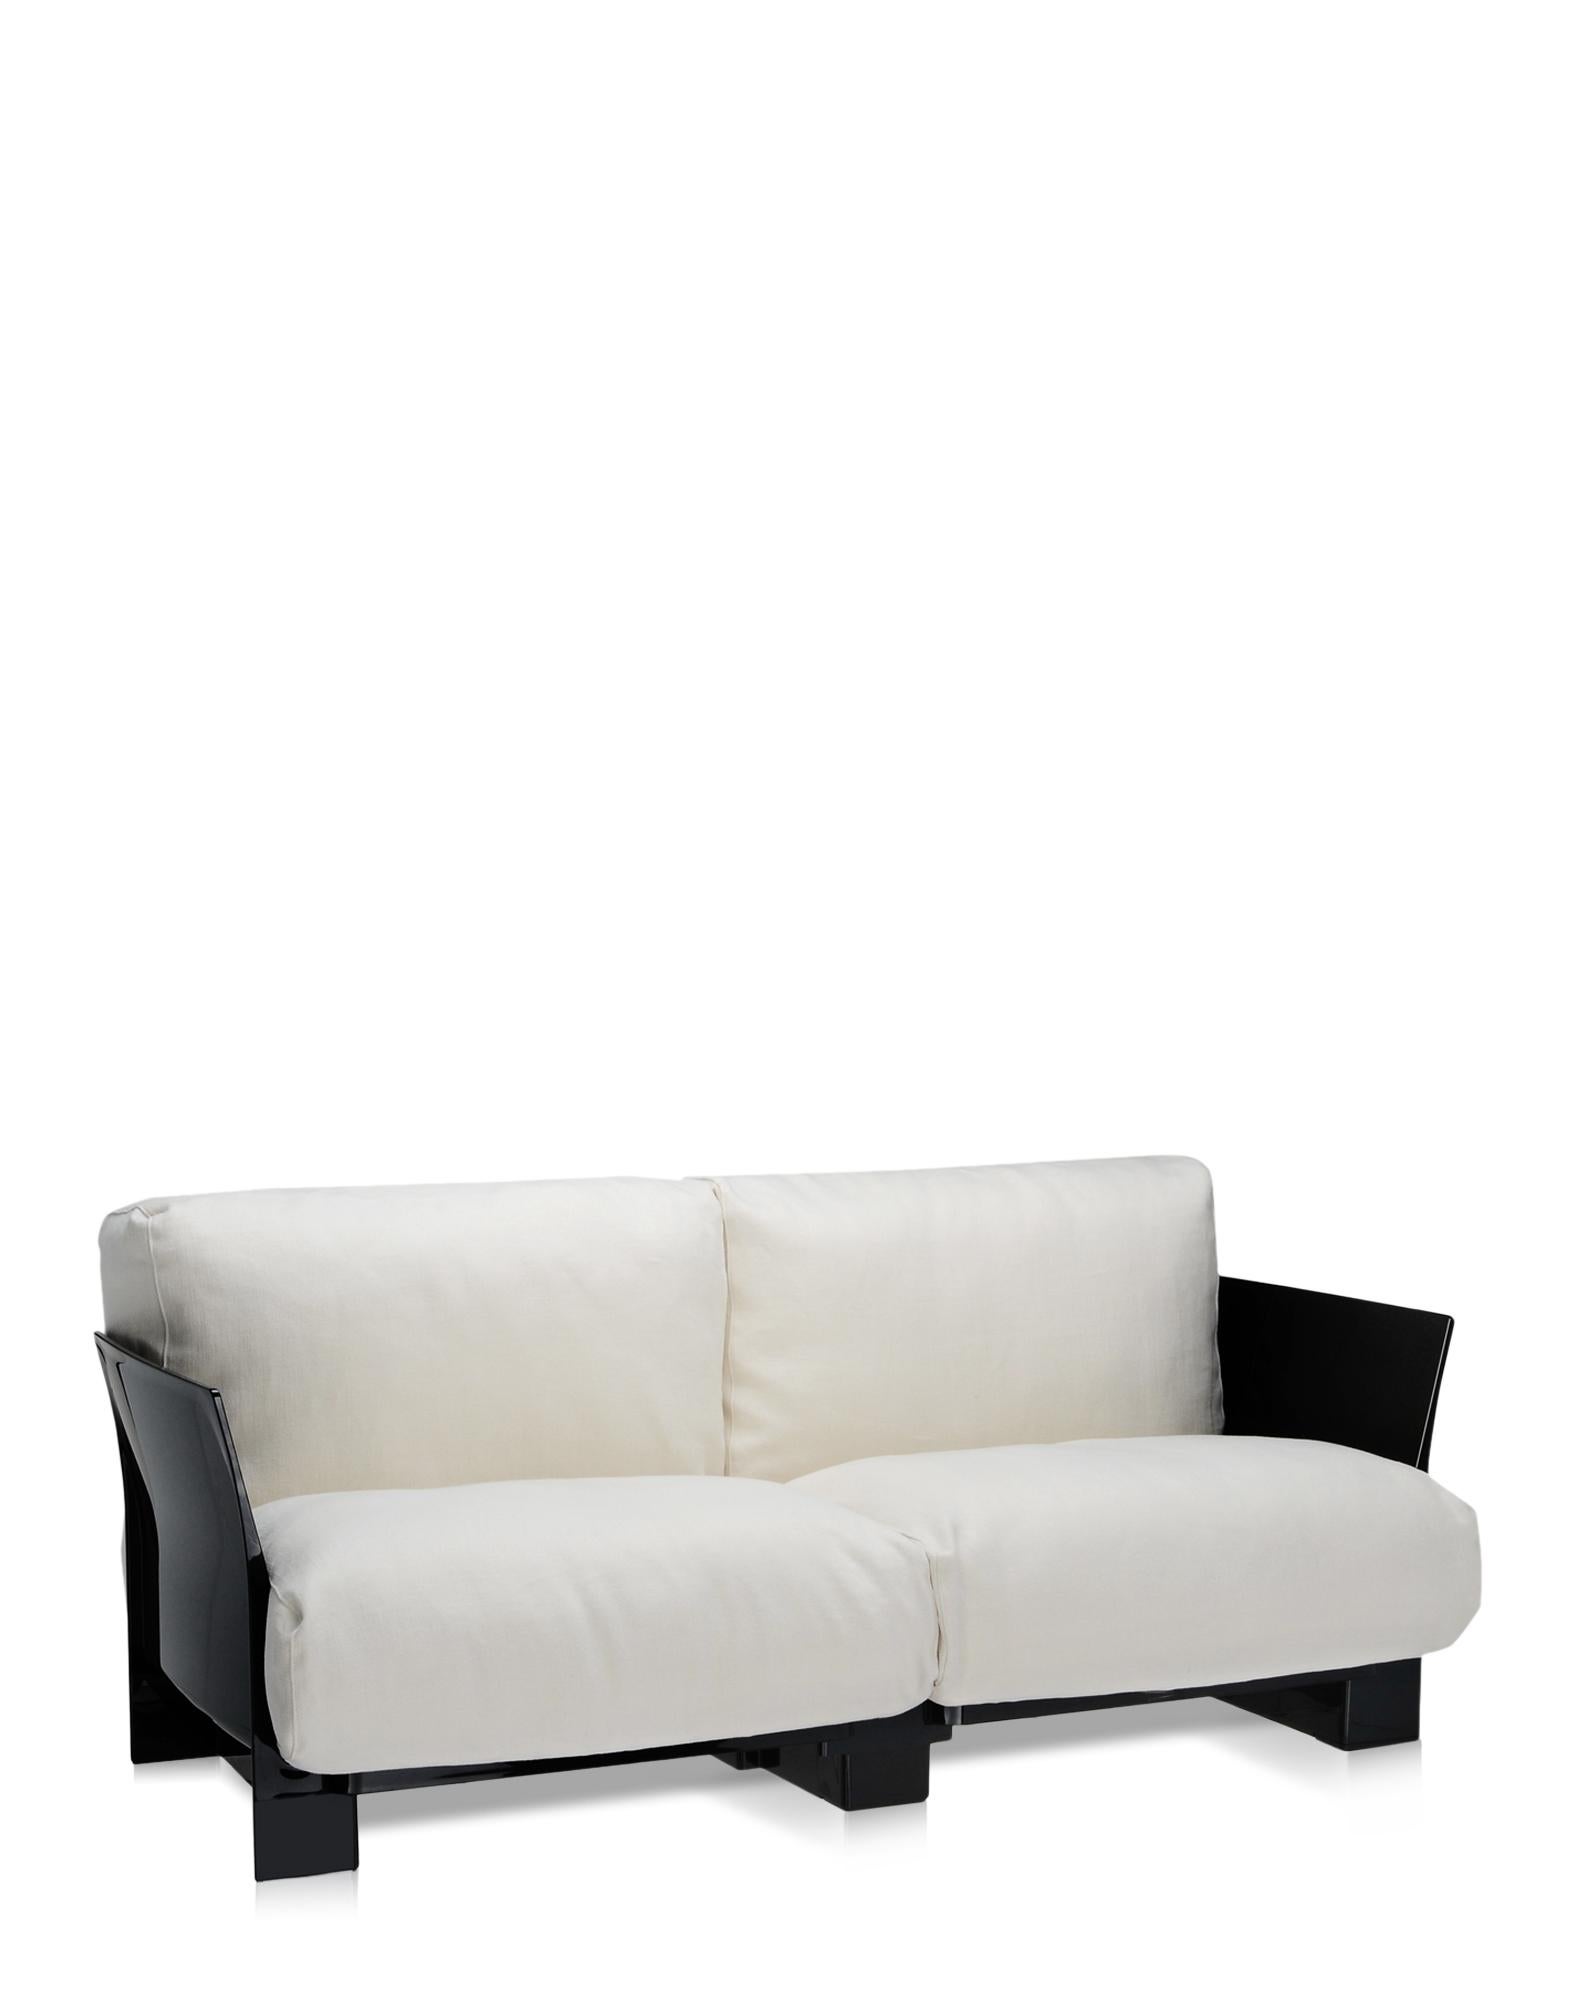 Contemporary Kartell Pop Outdoor Sofa in Sunbrella White by Piero Lissoni For Sale